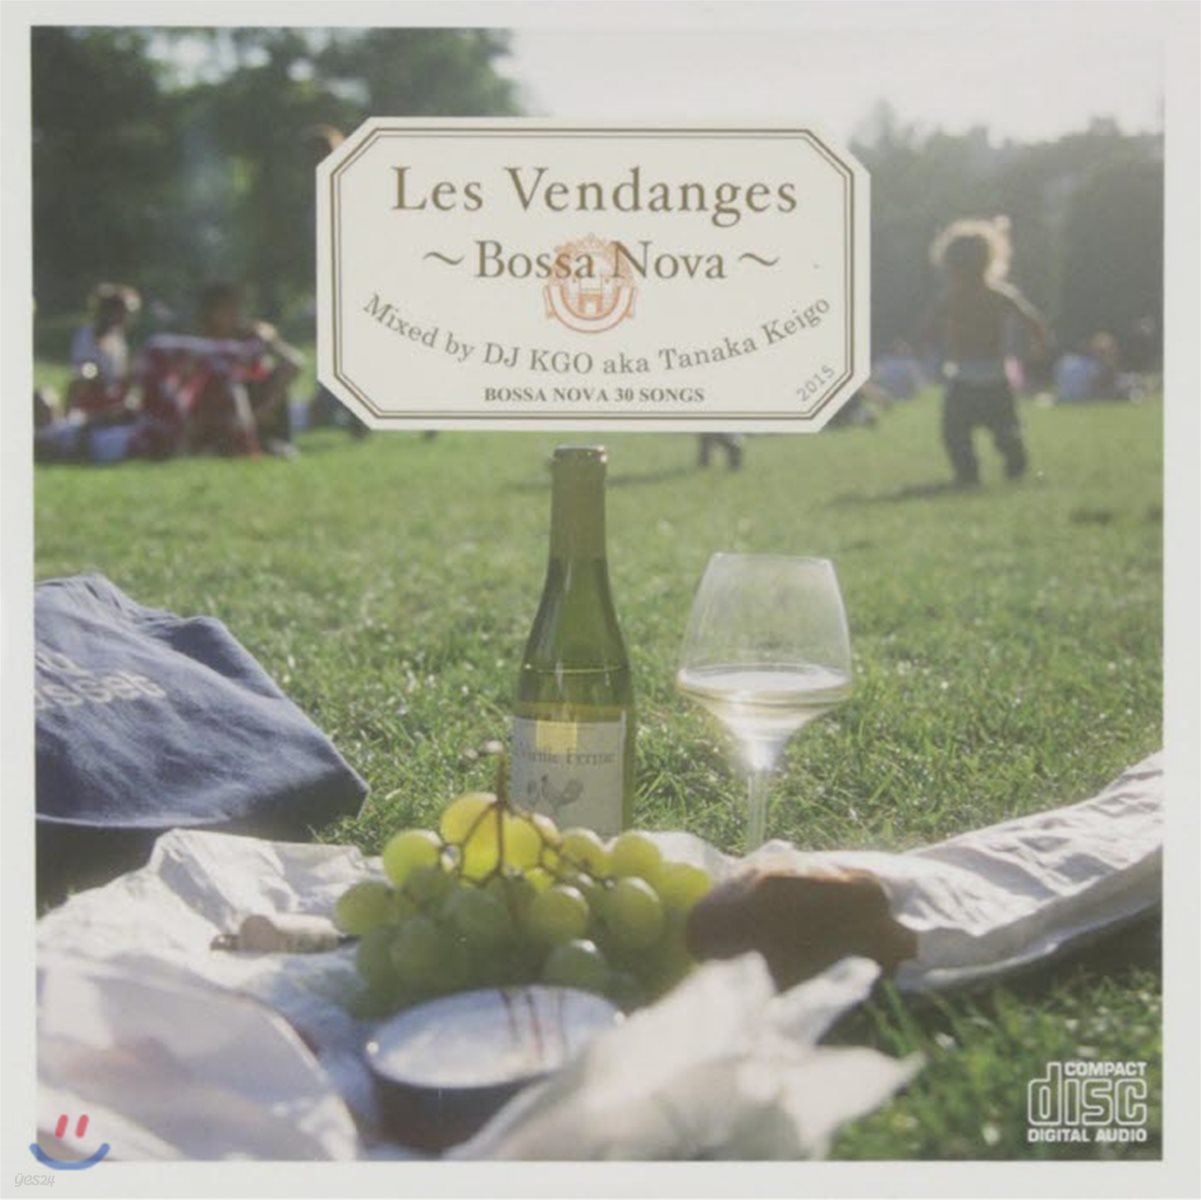 Les Vendanges ~Bossa Nova~: Mixed by DJ KGO (레 벤당쥬 시리즈 - 보사 노바)